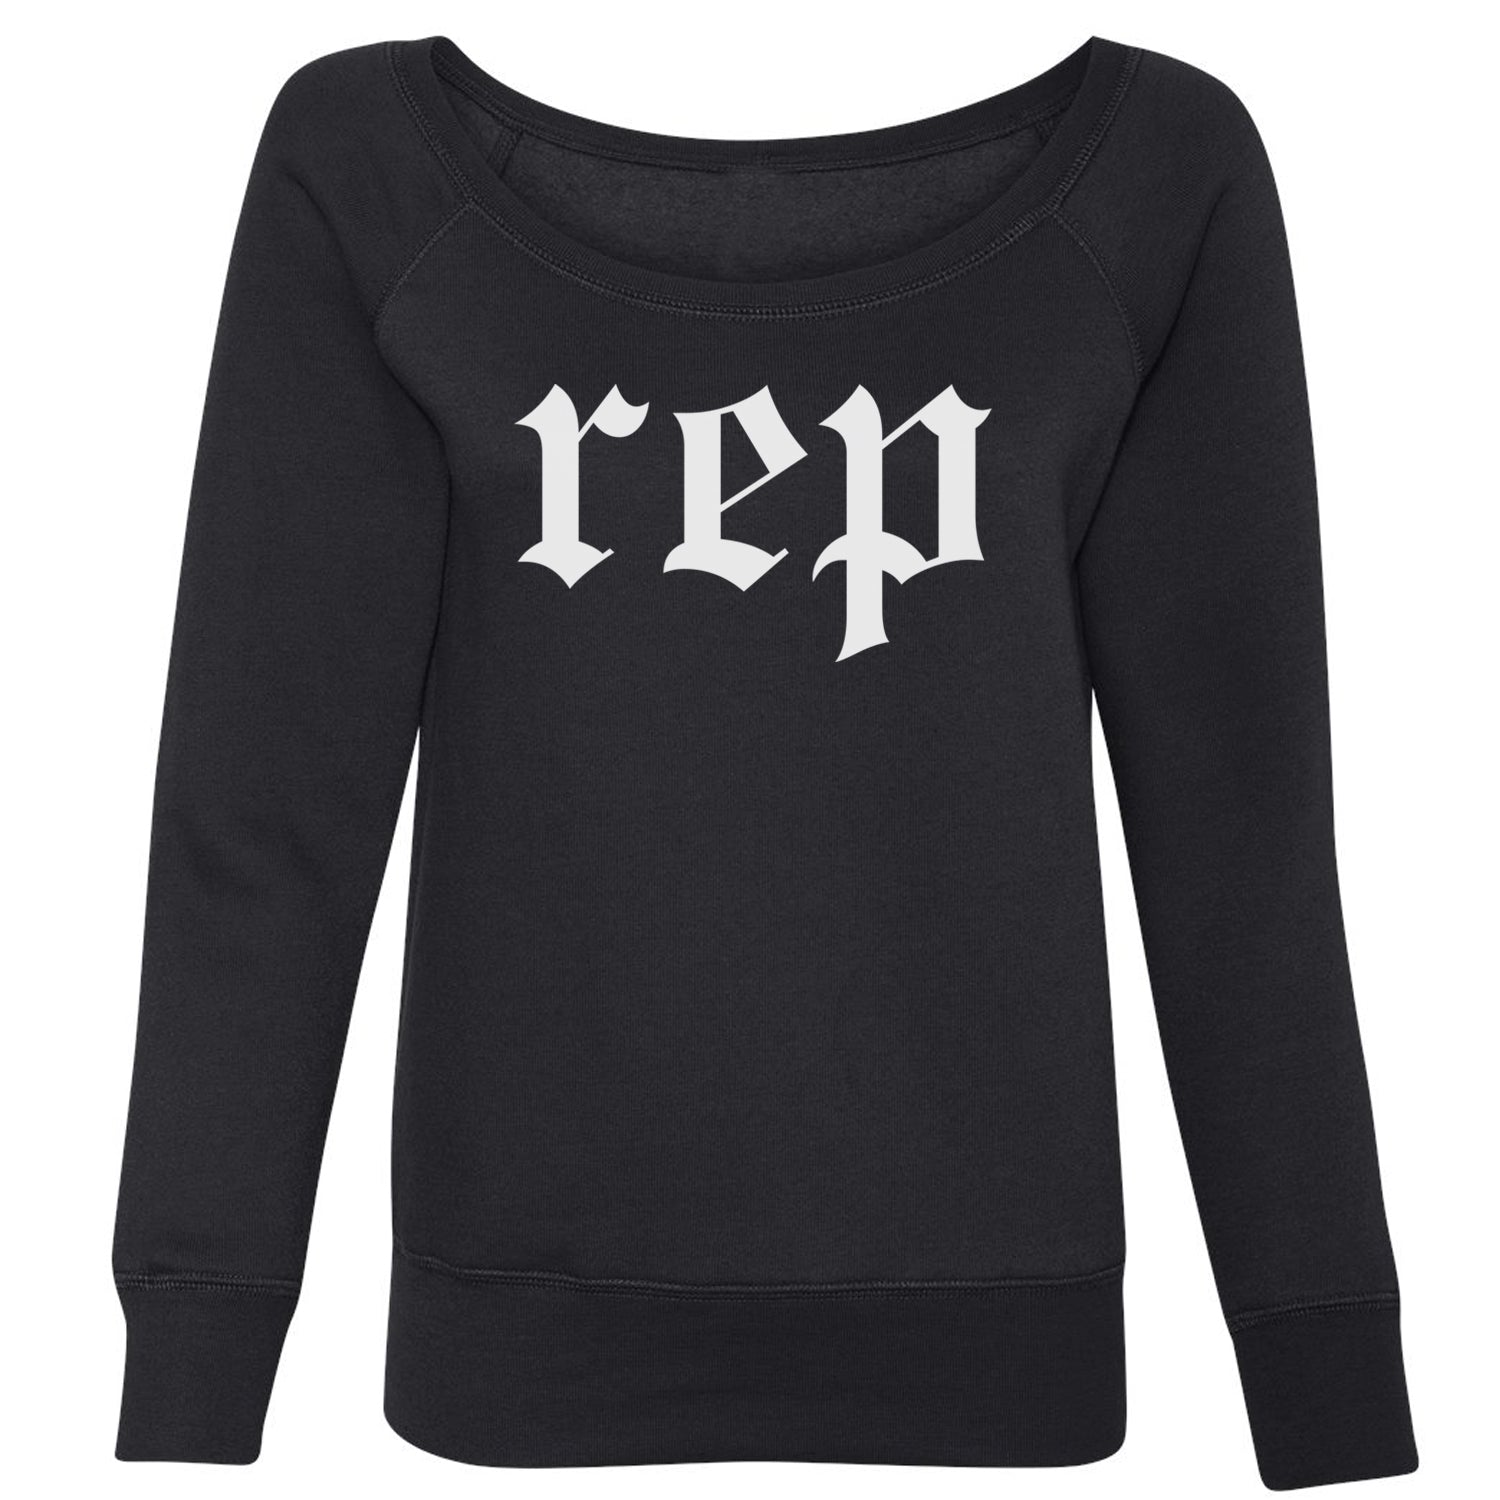 REP Reputation Music Lover Gift Fan Favorite Slouchy Off Shoulder Oversized Sweatshirt